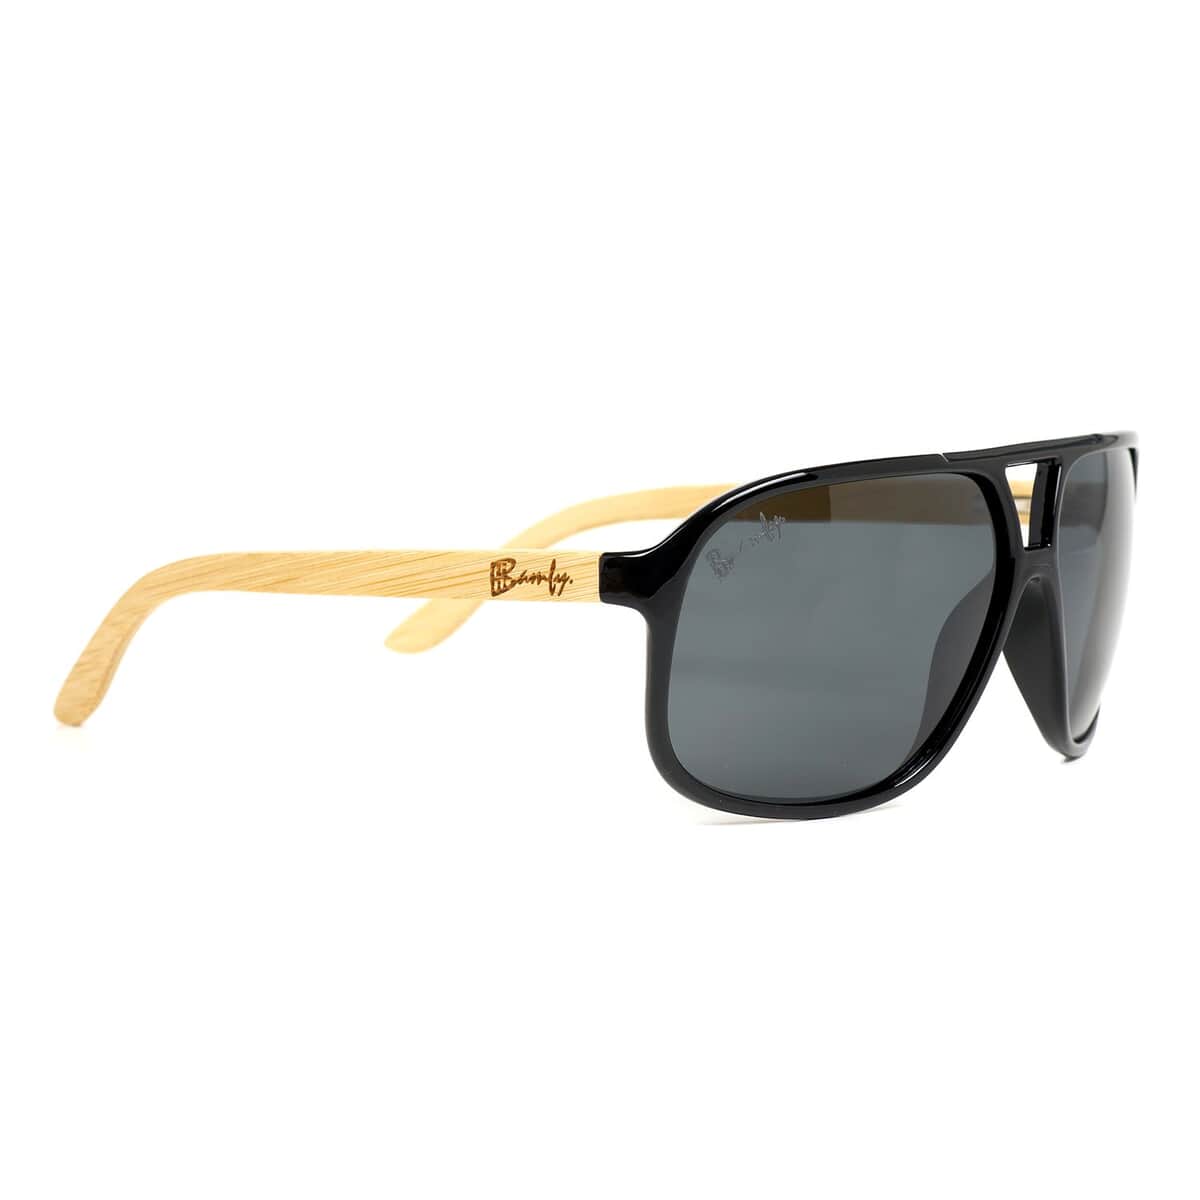 Value Buy Bamfy Hollywood UV400 Polarized Sunglasses with Bamboo Legs and Case -Black image number 0